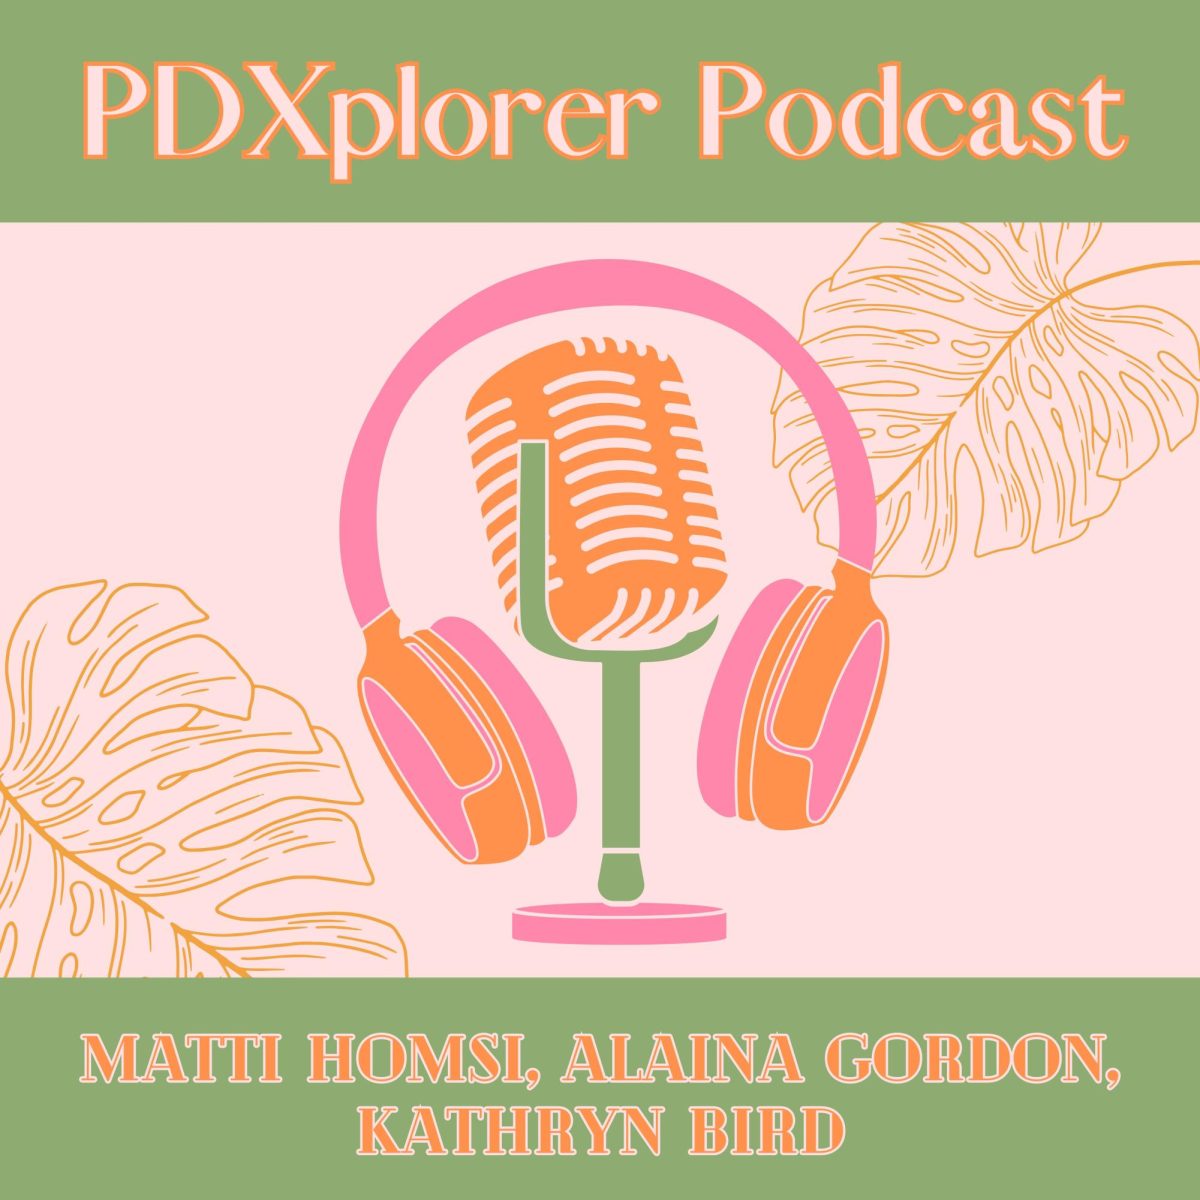 PDXplorer podcast